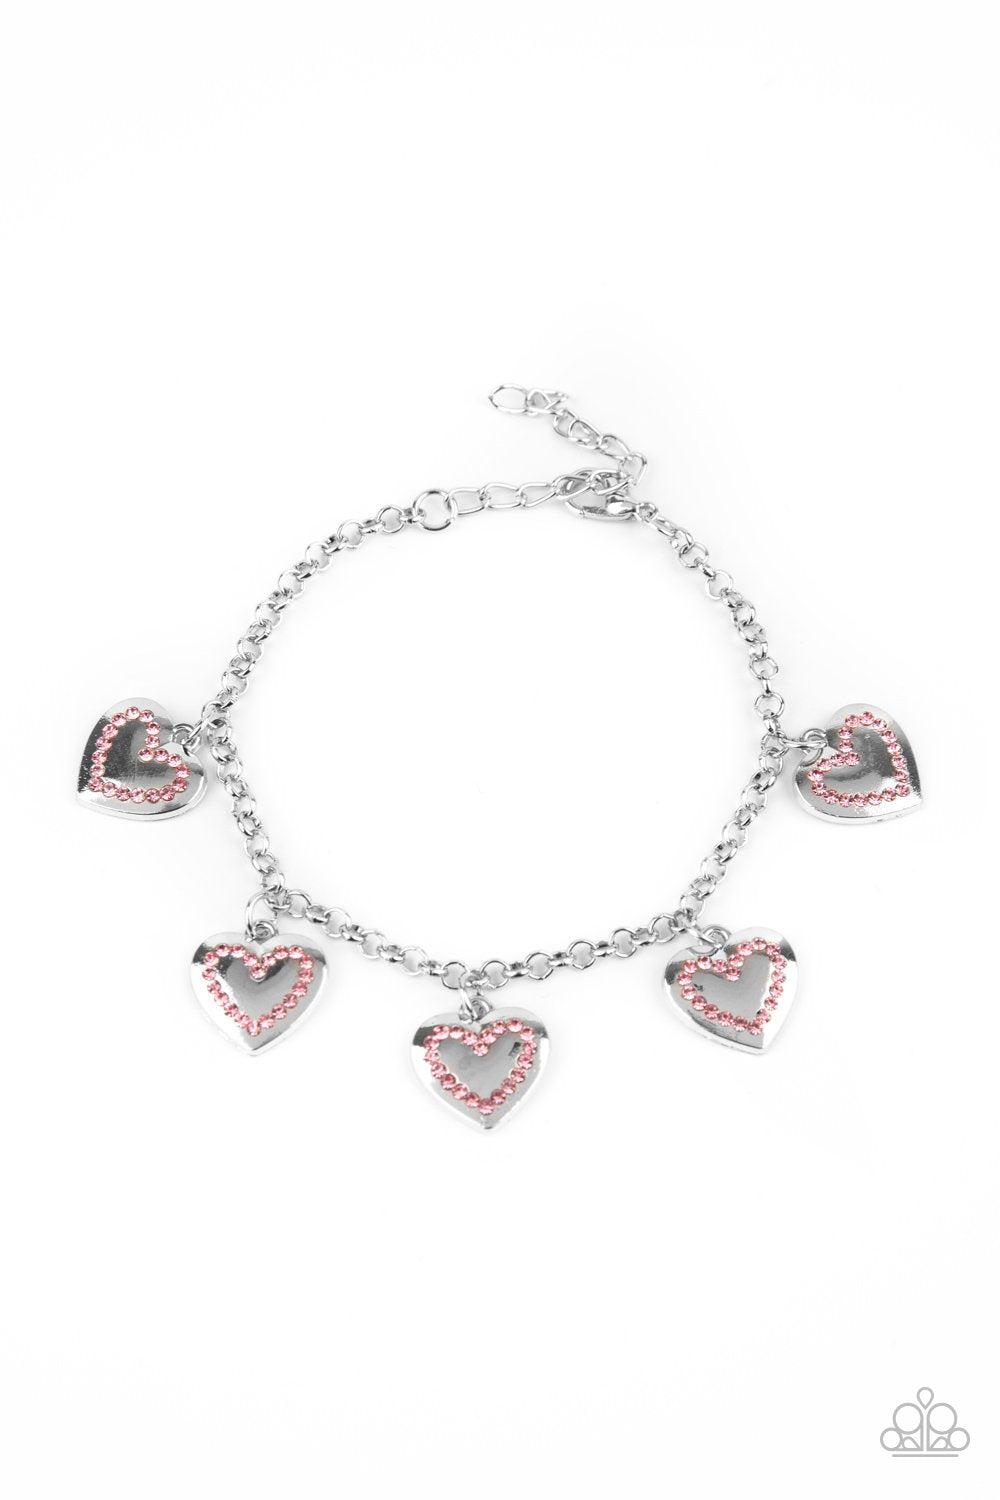 Matchmaker Matchmaker Pink Rhinestone Heart Bracelet - Paparazzi Accessories - lightbox -CarasShop.com - $5 Jewelry by Cara Jewels